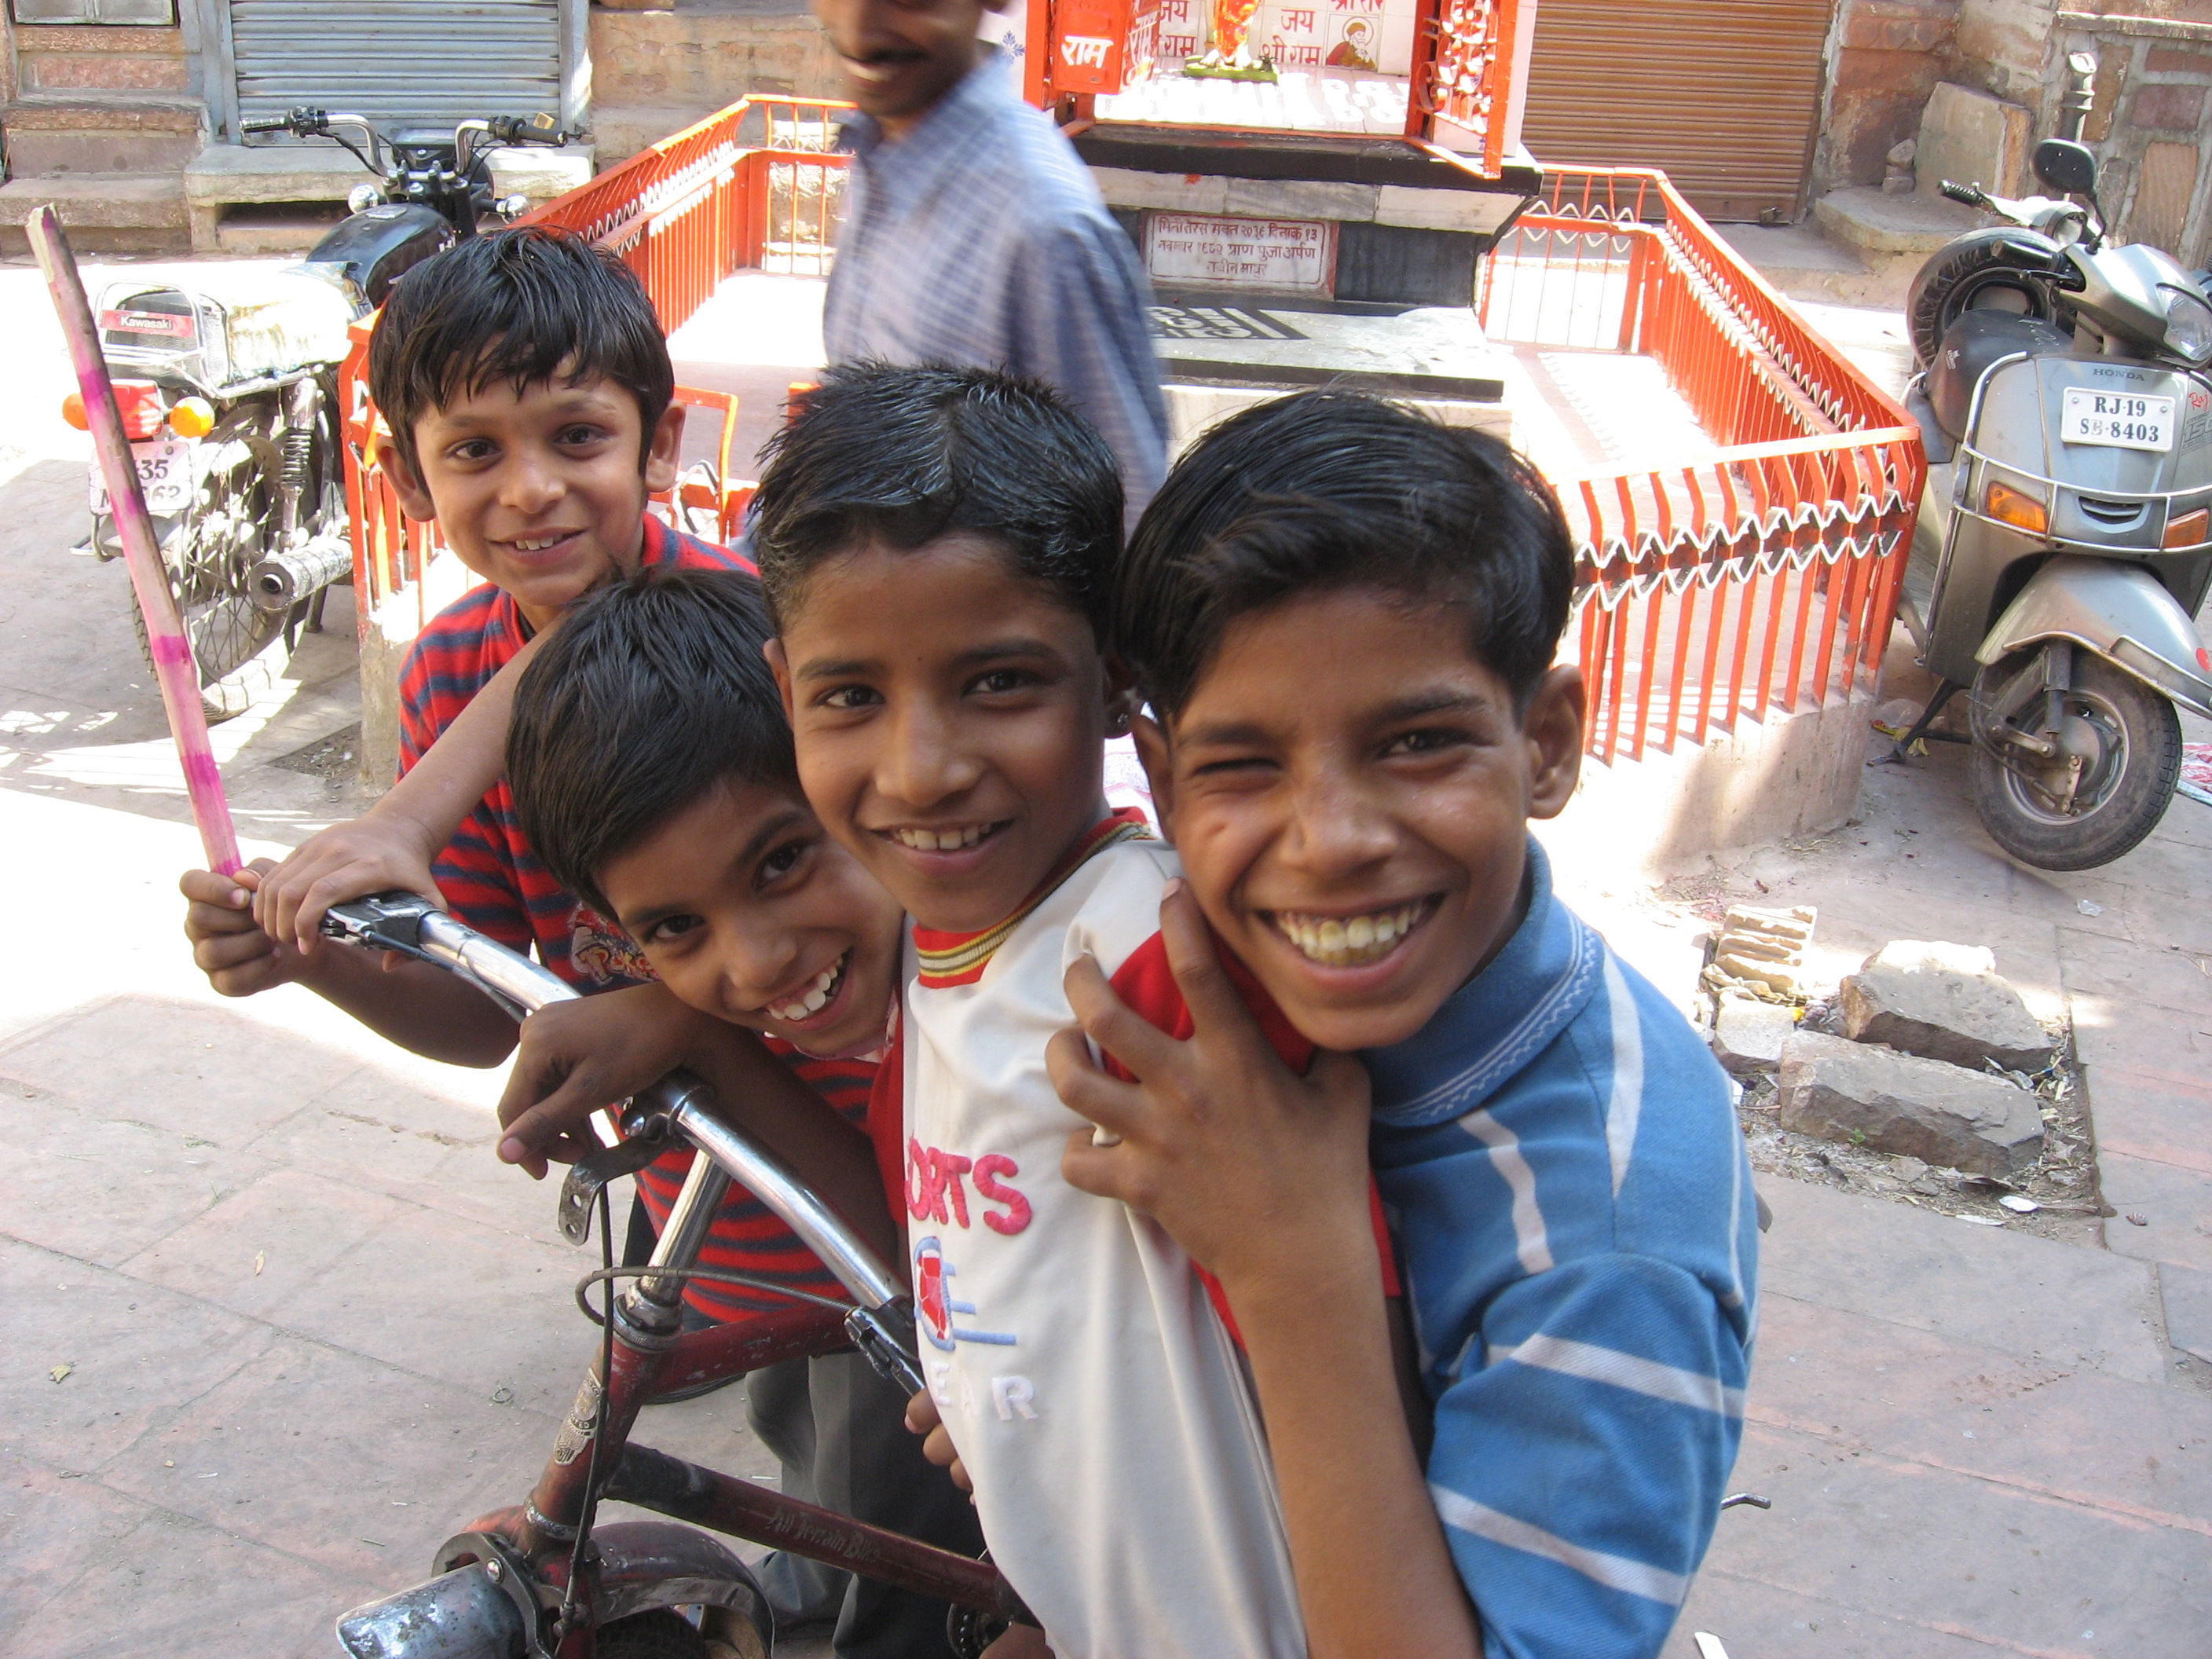 Jodhpur children